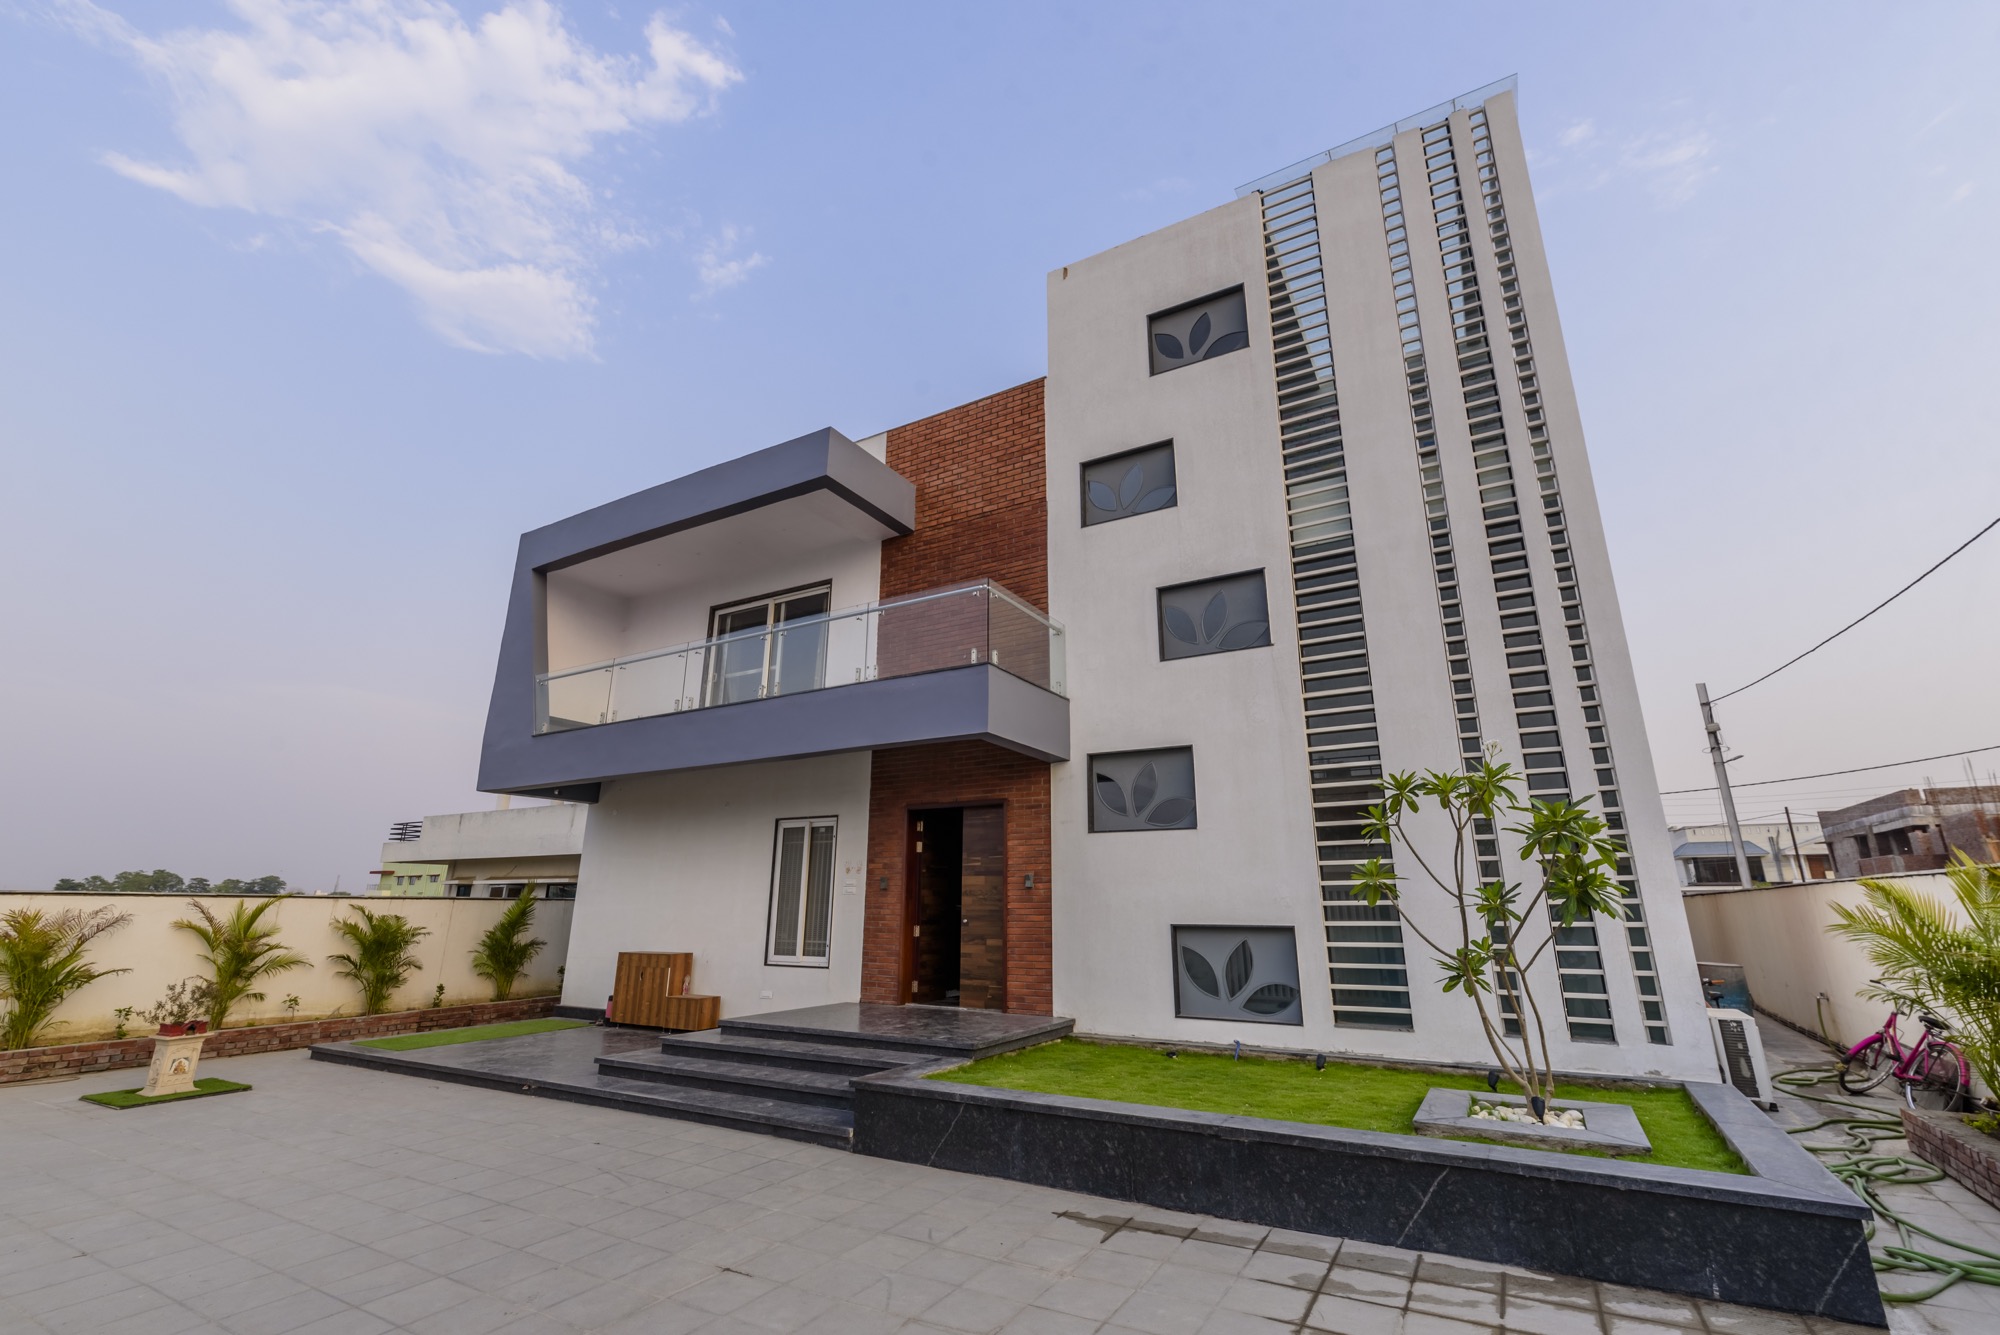 Residence for Mr. Vijay Sankhala Arhcitecture by Rishabh Lunia and Associates